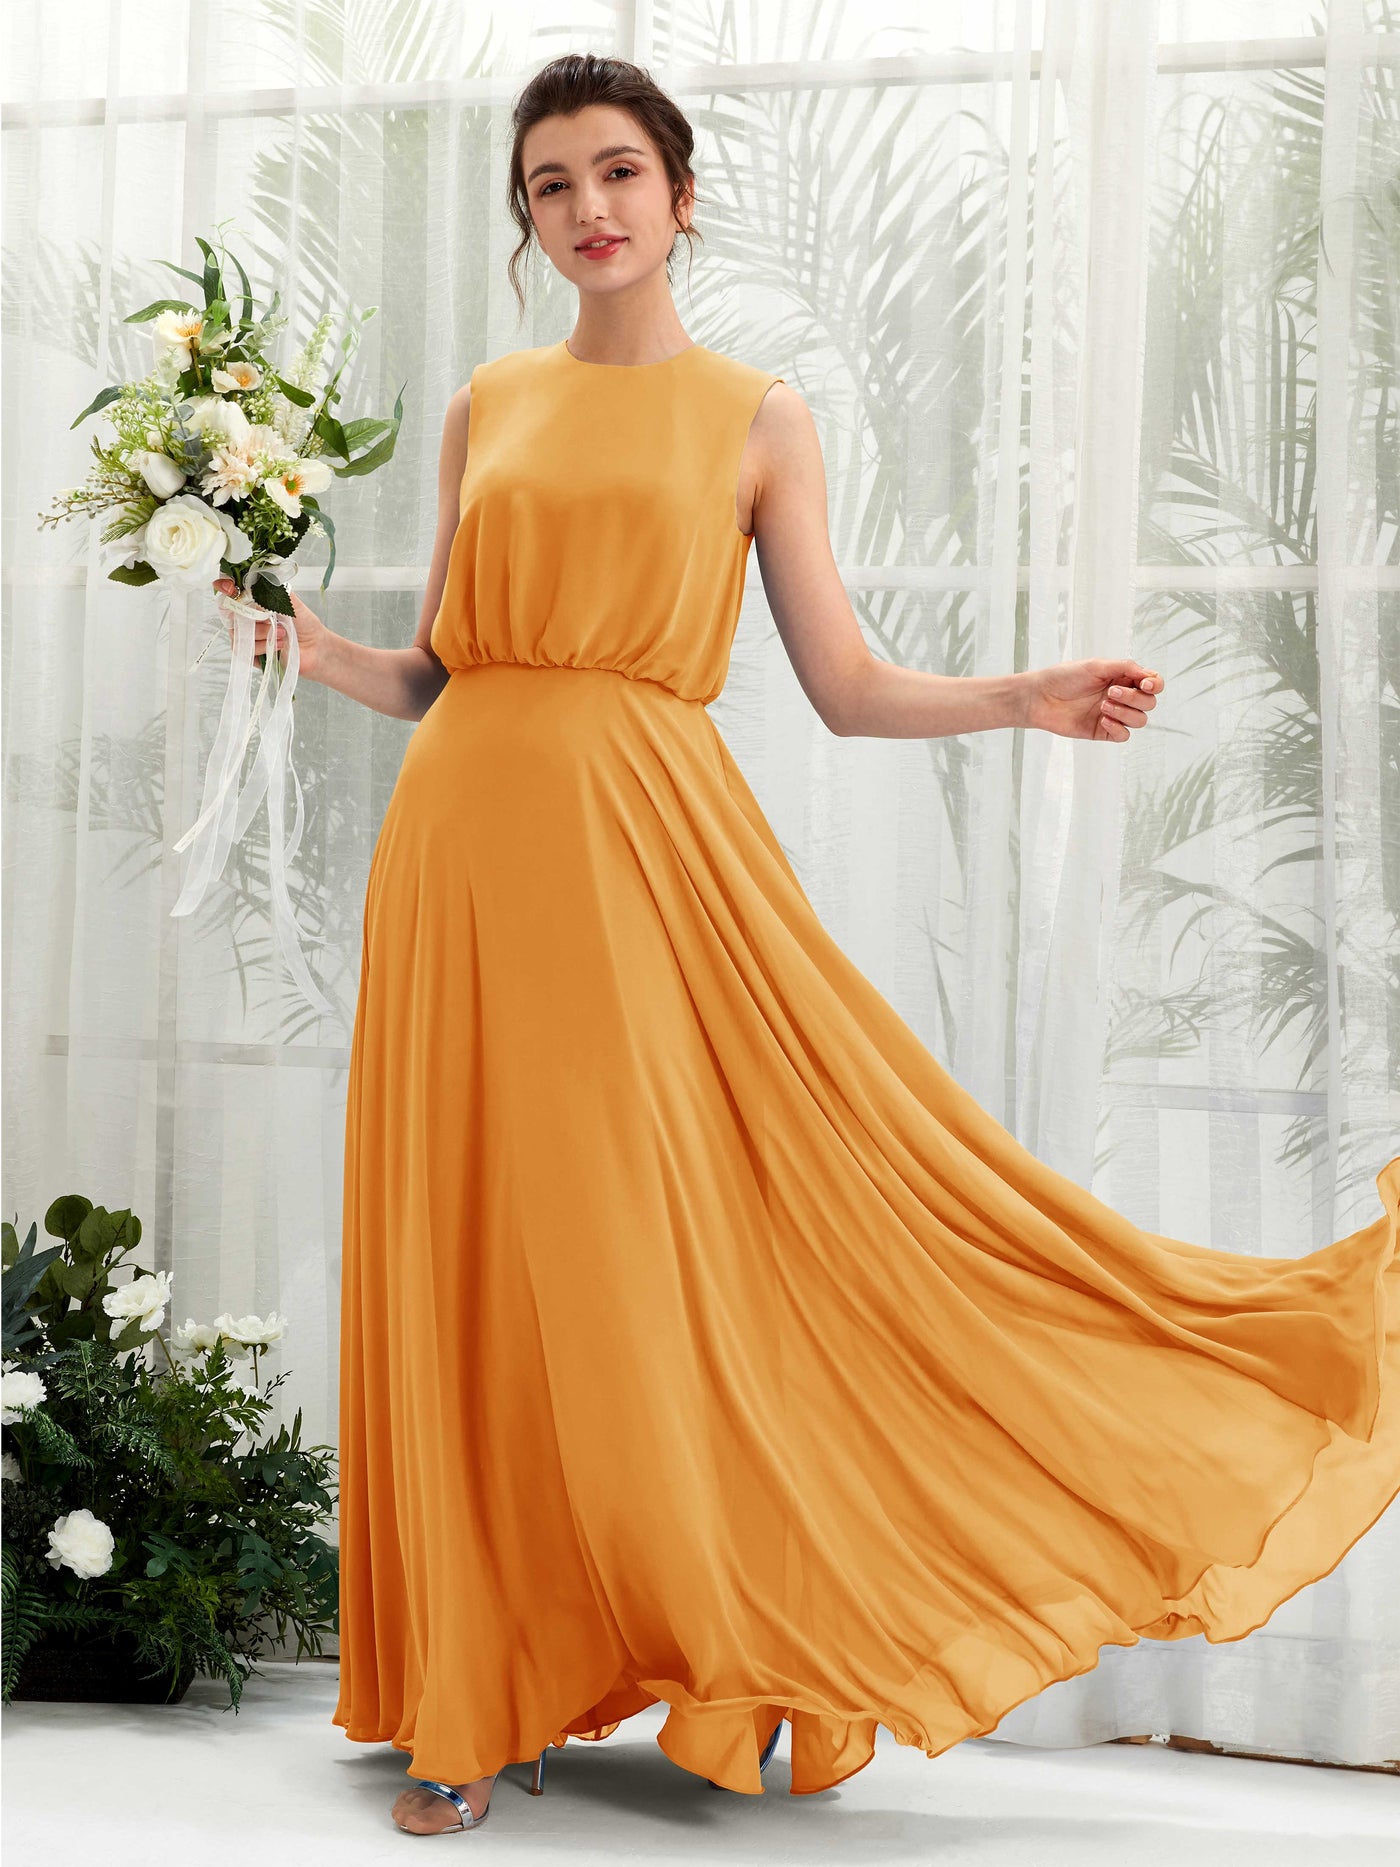 Round Sleeveless Chiffon Bridesmaid Dress - Mango (81222802)#color_mango